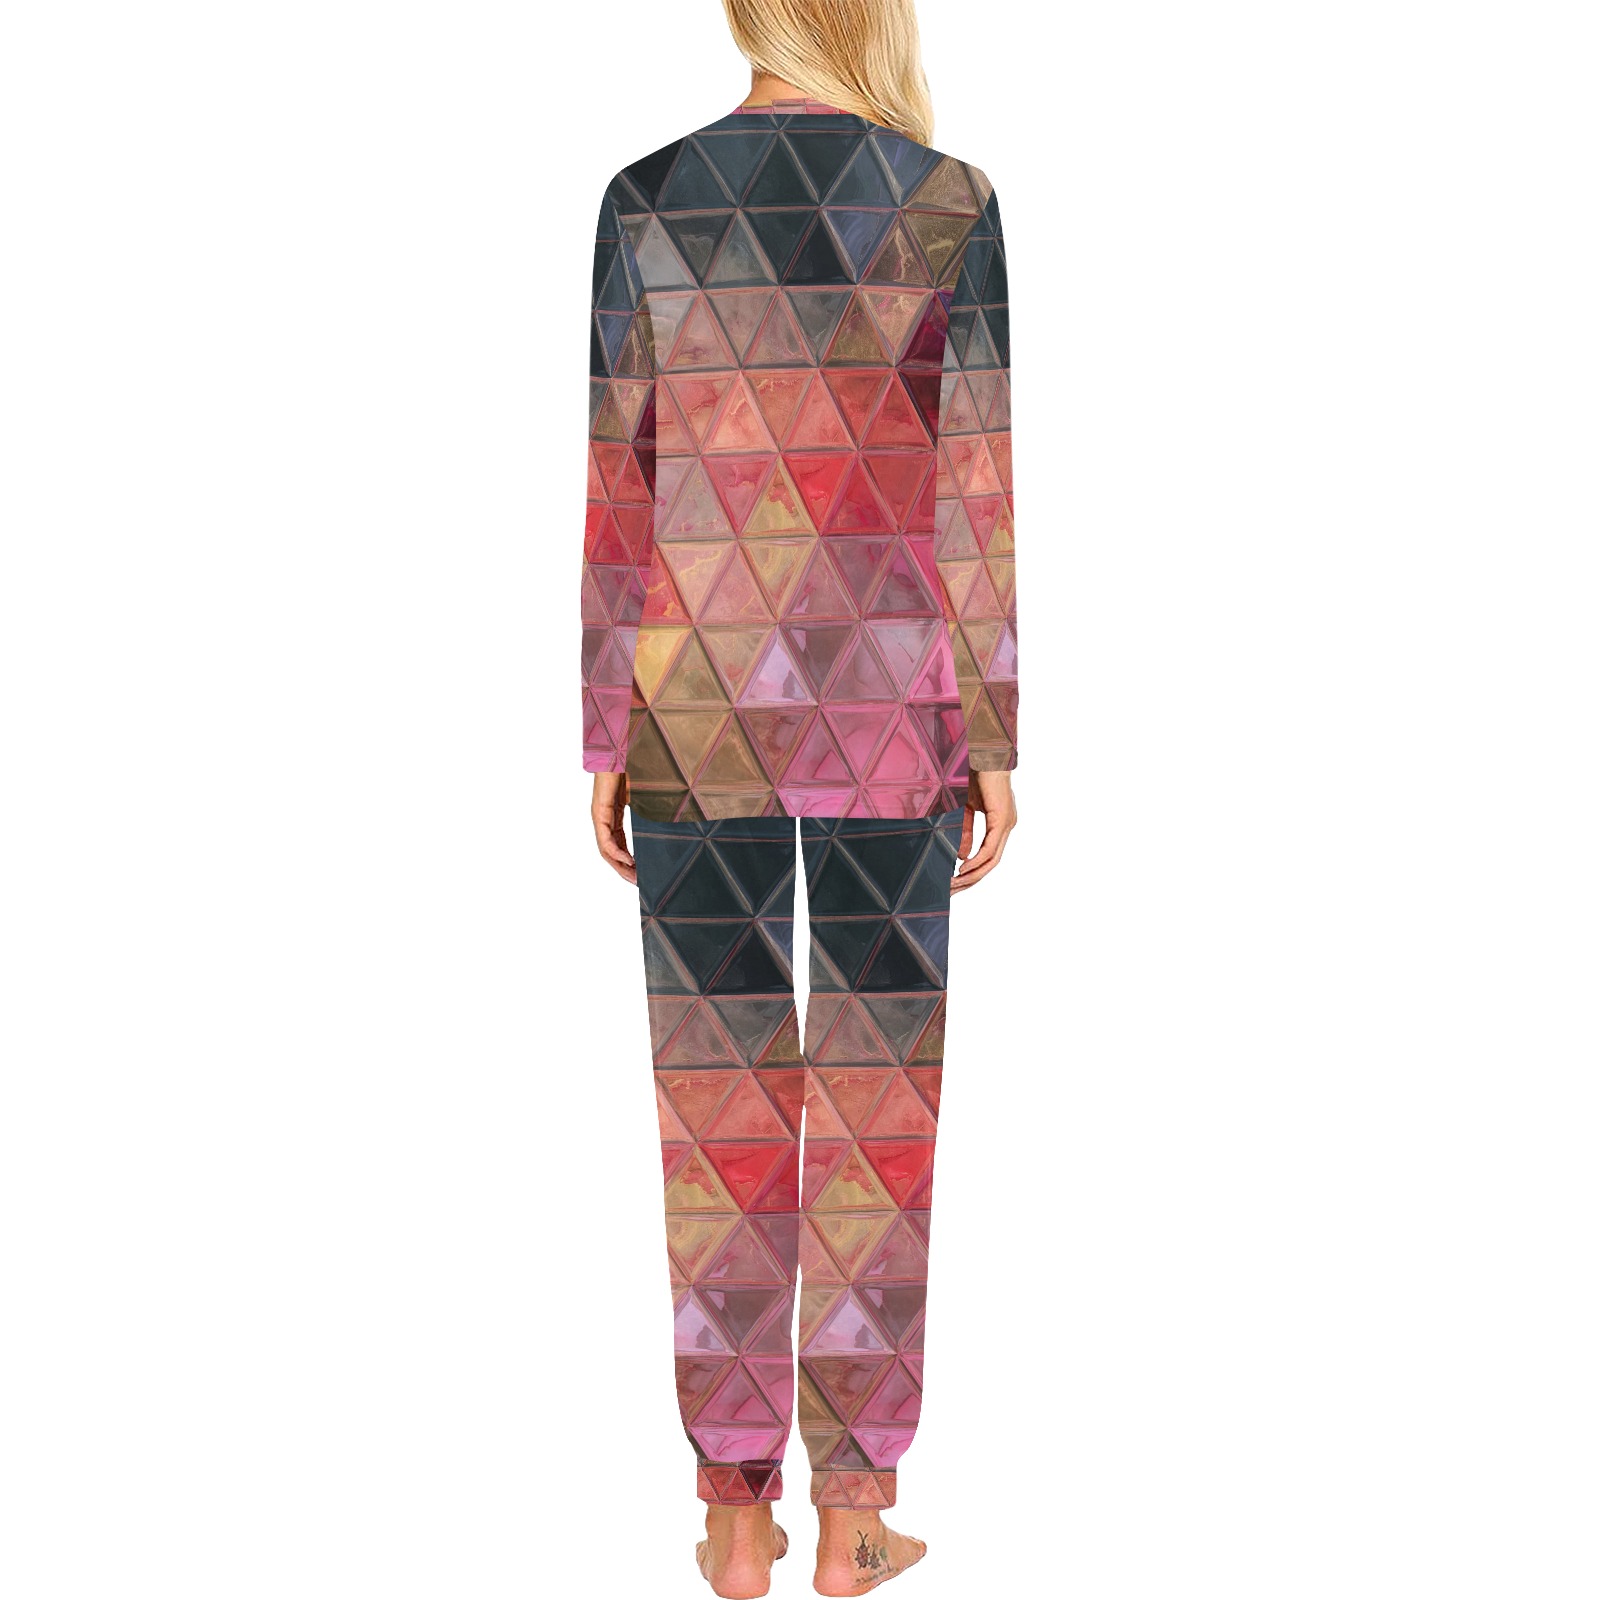 mosaic triangle 3 Women's All Over Print Pajama Set